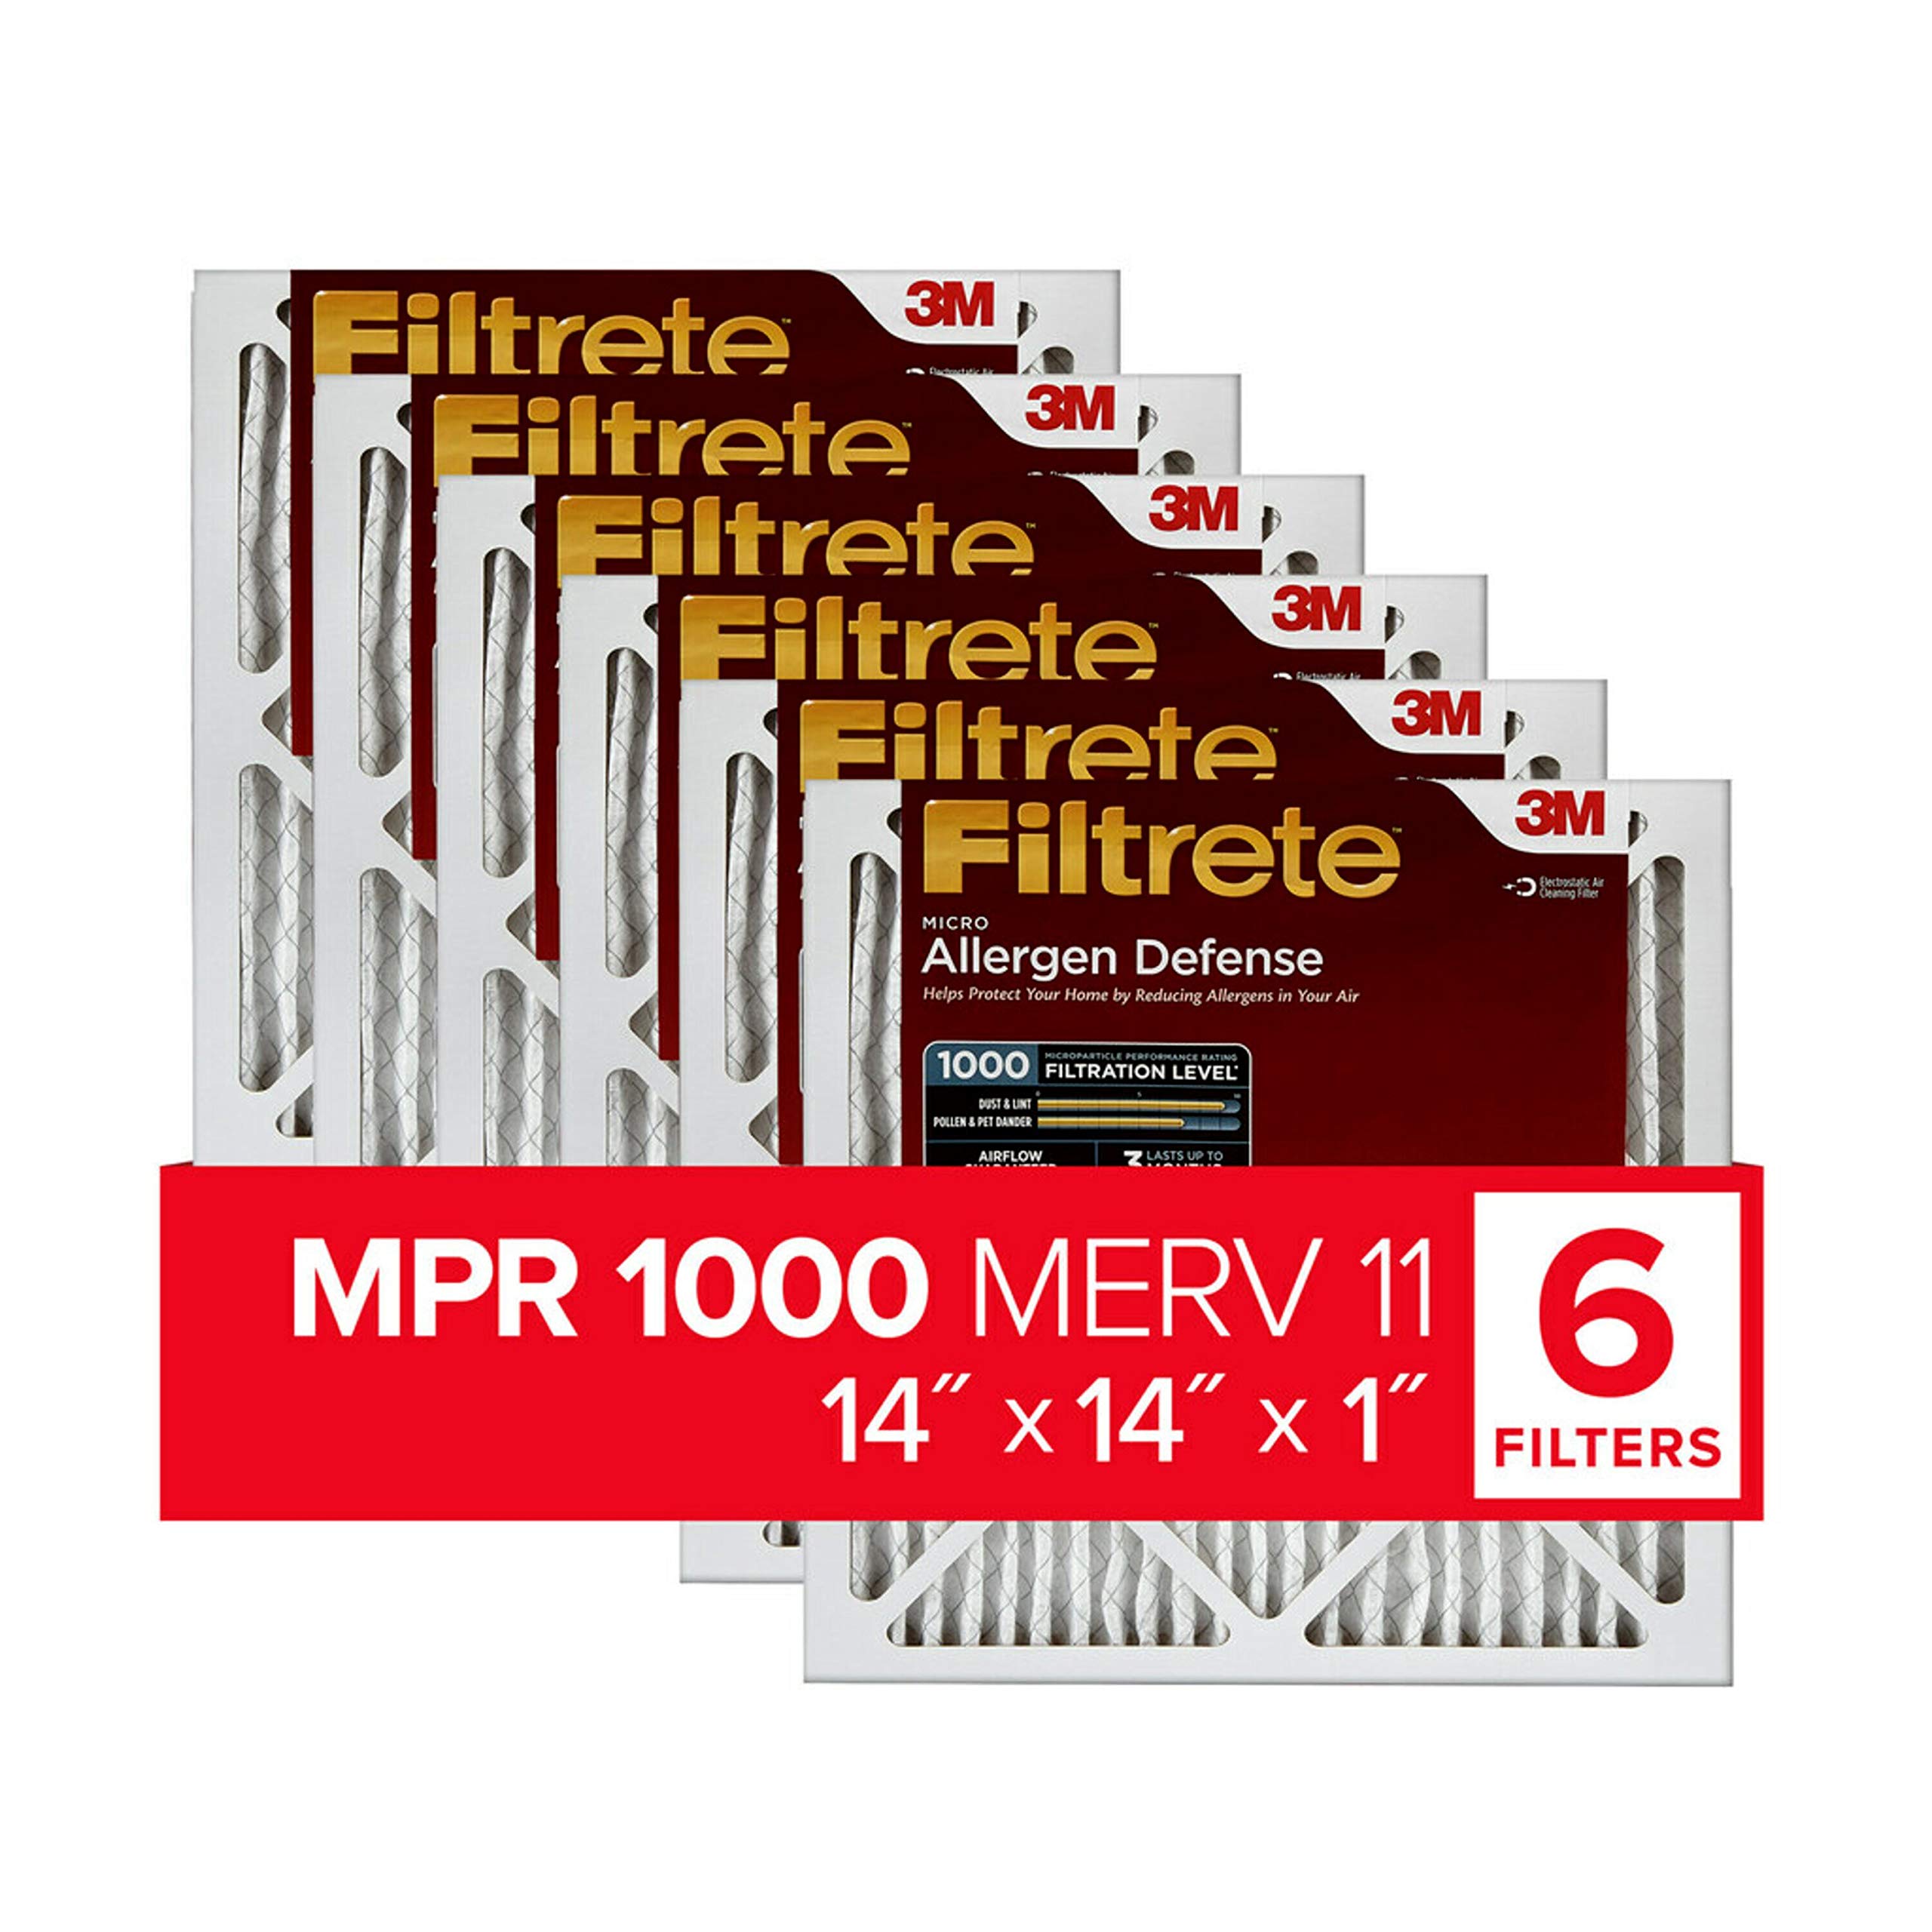 Filtrete 14x14x1 エアフィルター MPR 1000 MERV 11、アレルゲン防御、6 個パック (正確な寸法 13.81x13.81x0.81)